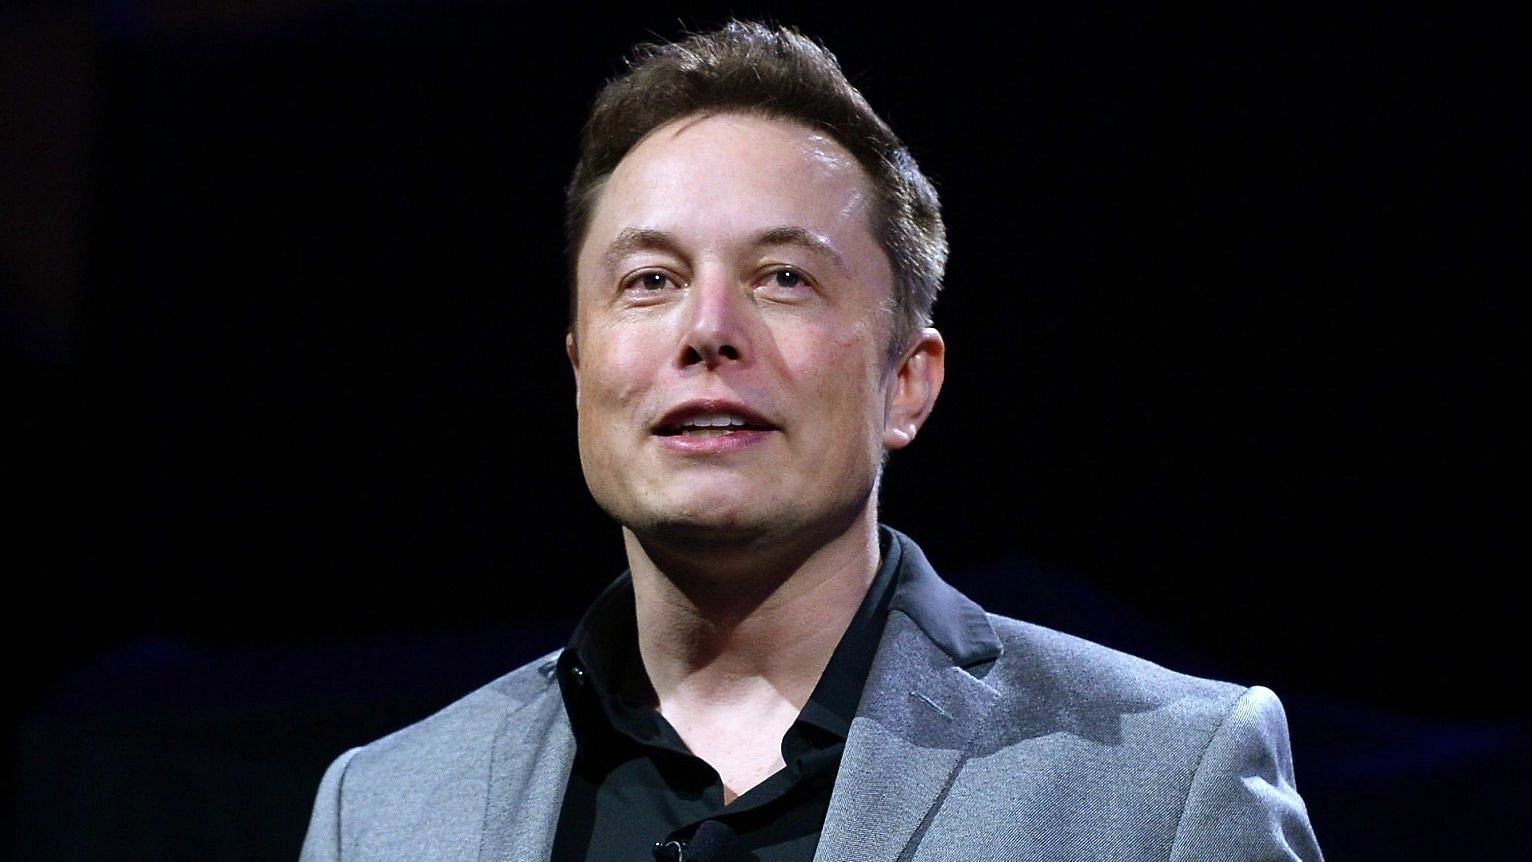 <div class="paragraphs"><p>Elon Musk, the chief executive officer of Tesla Inc. Image used for representational purposes.&nbsp;</p></div>